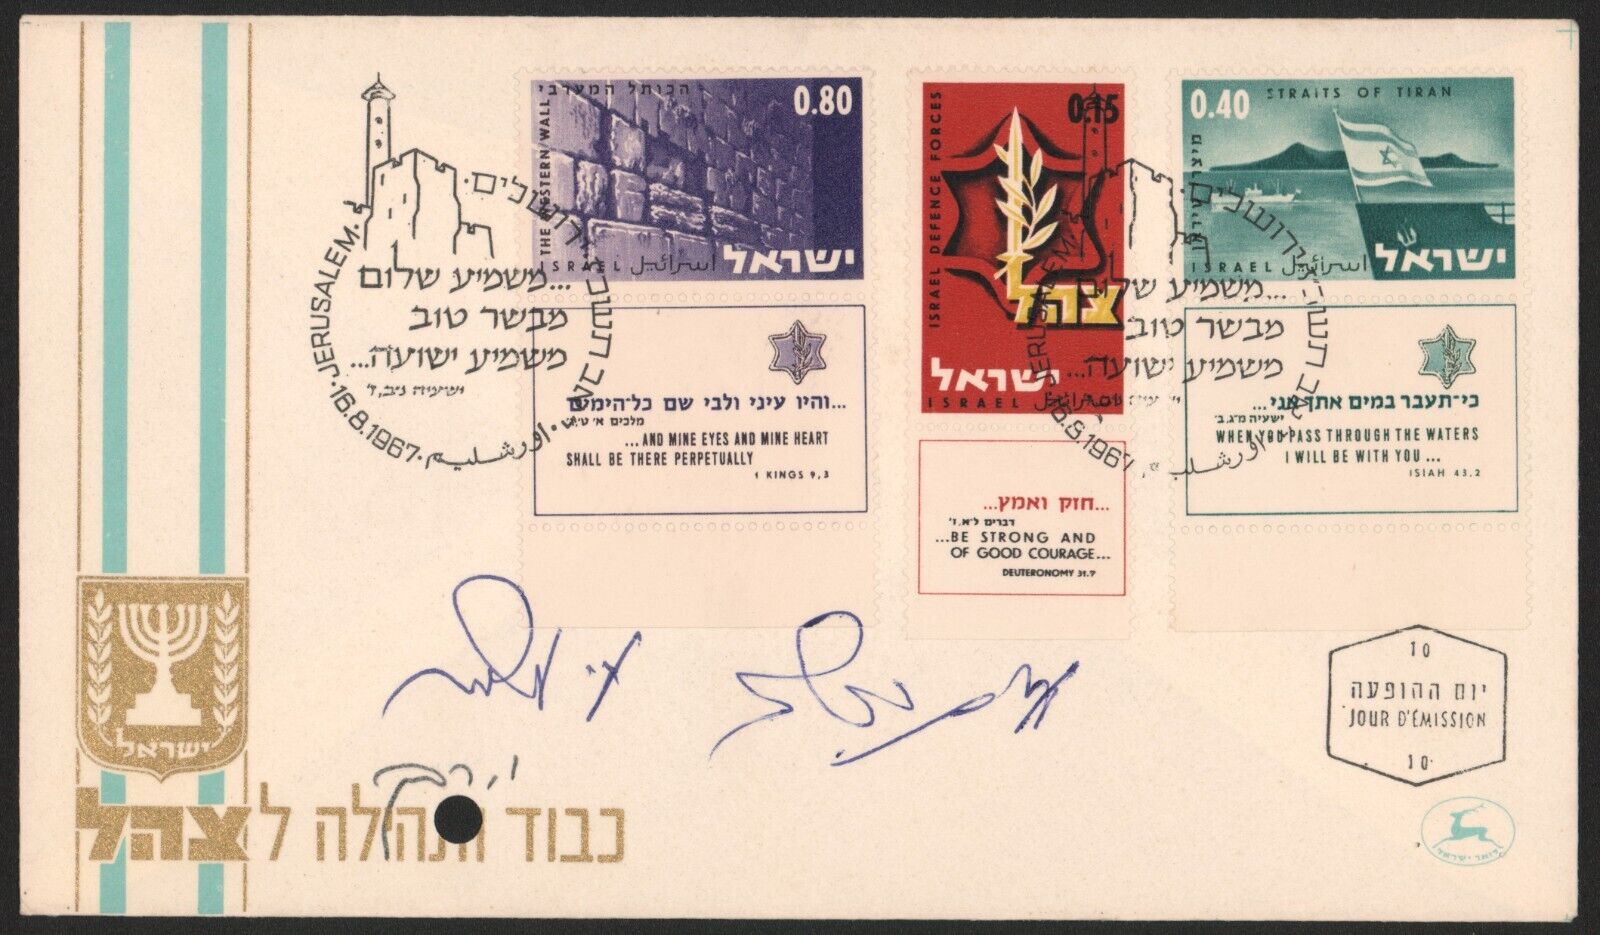 Yitzhak Rabin, Ezer Weizman and Haim Bar-Lev Signed First Day Cover